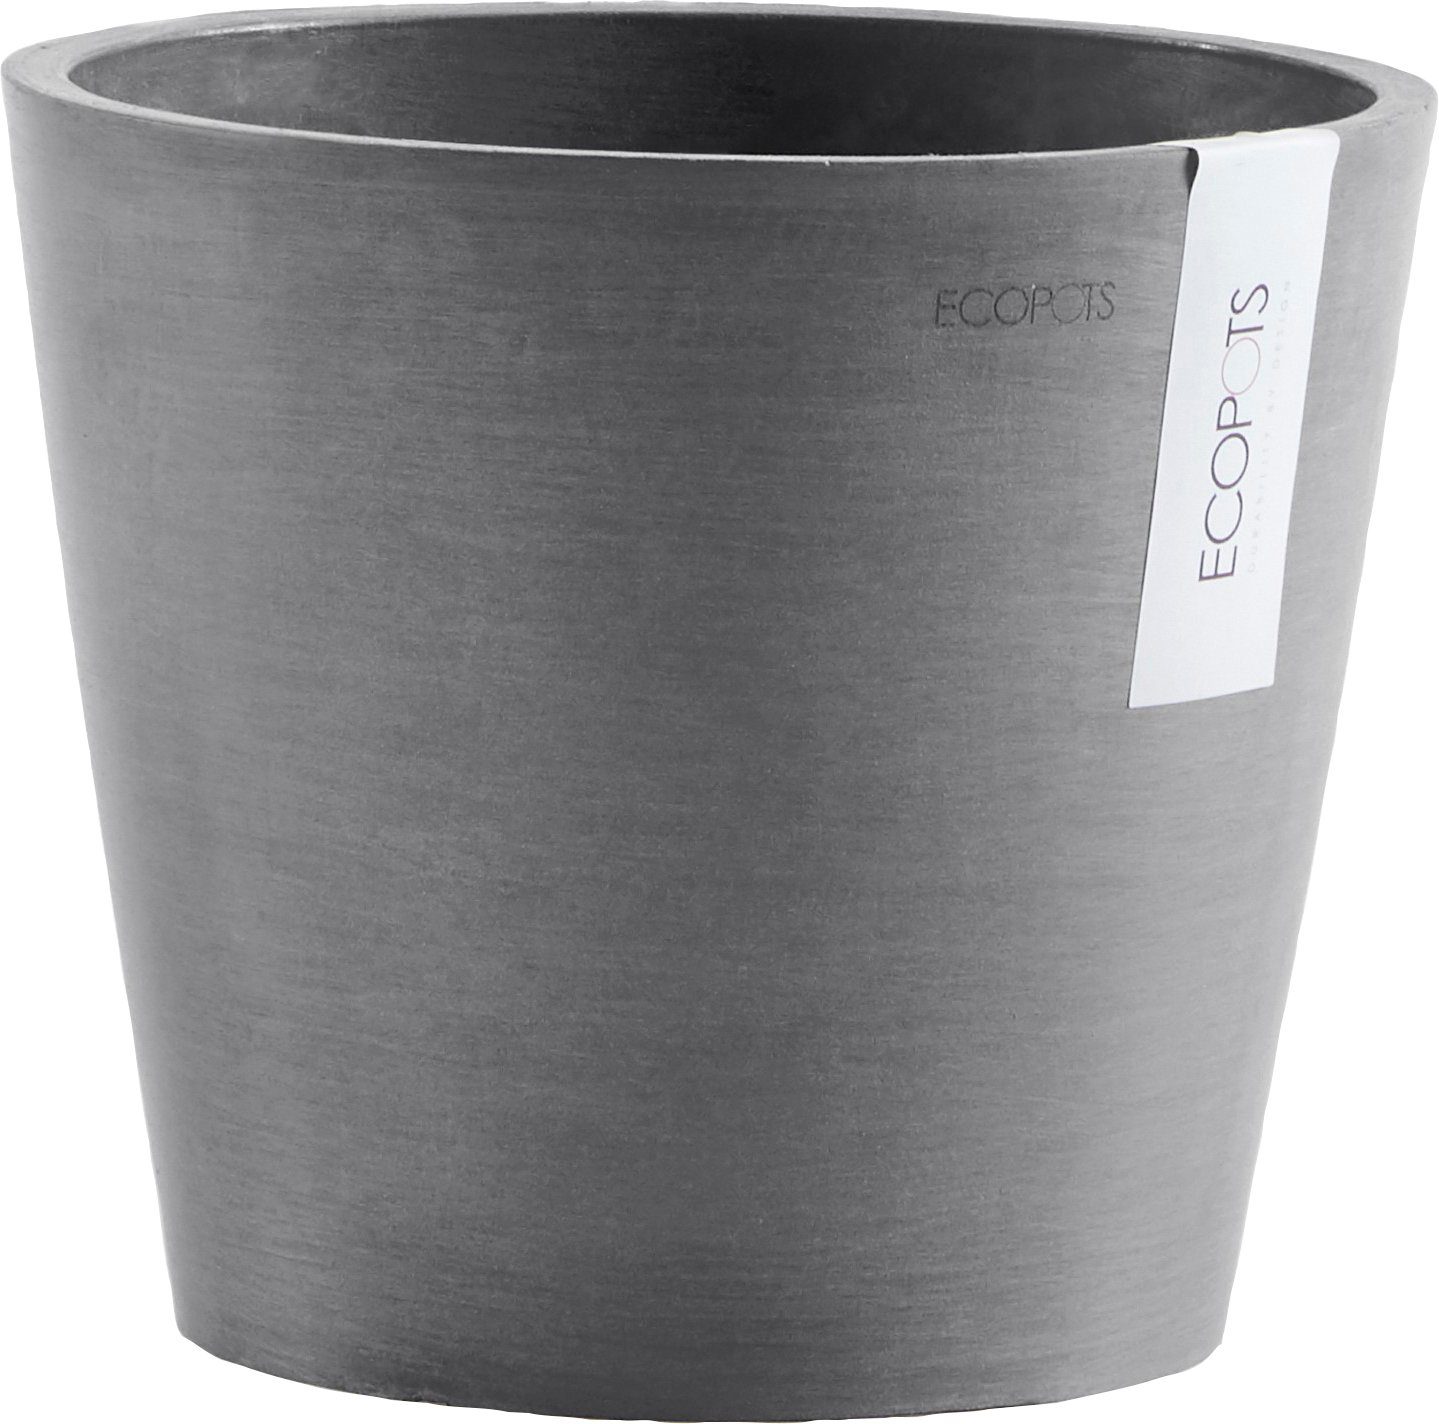 20x20x17,5 AMSTERDAM mit Grey, Blumentopf Wasserreservoir cm, BxTxH: ECOPOTS